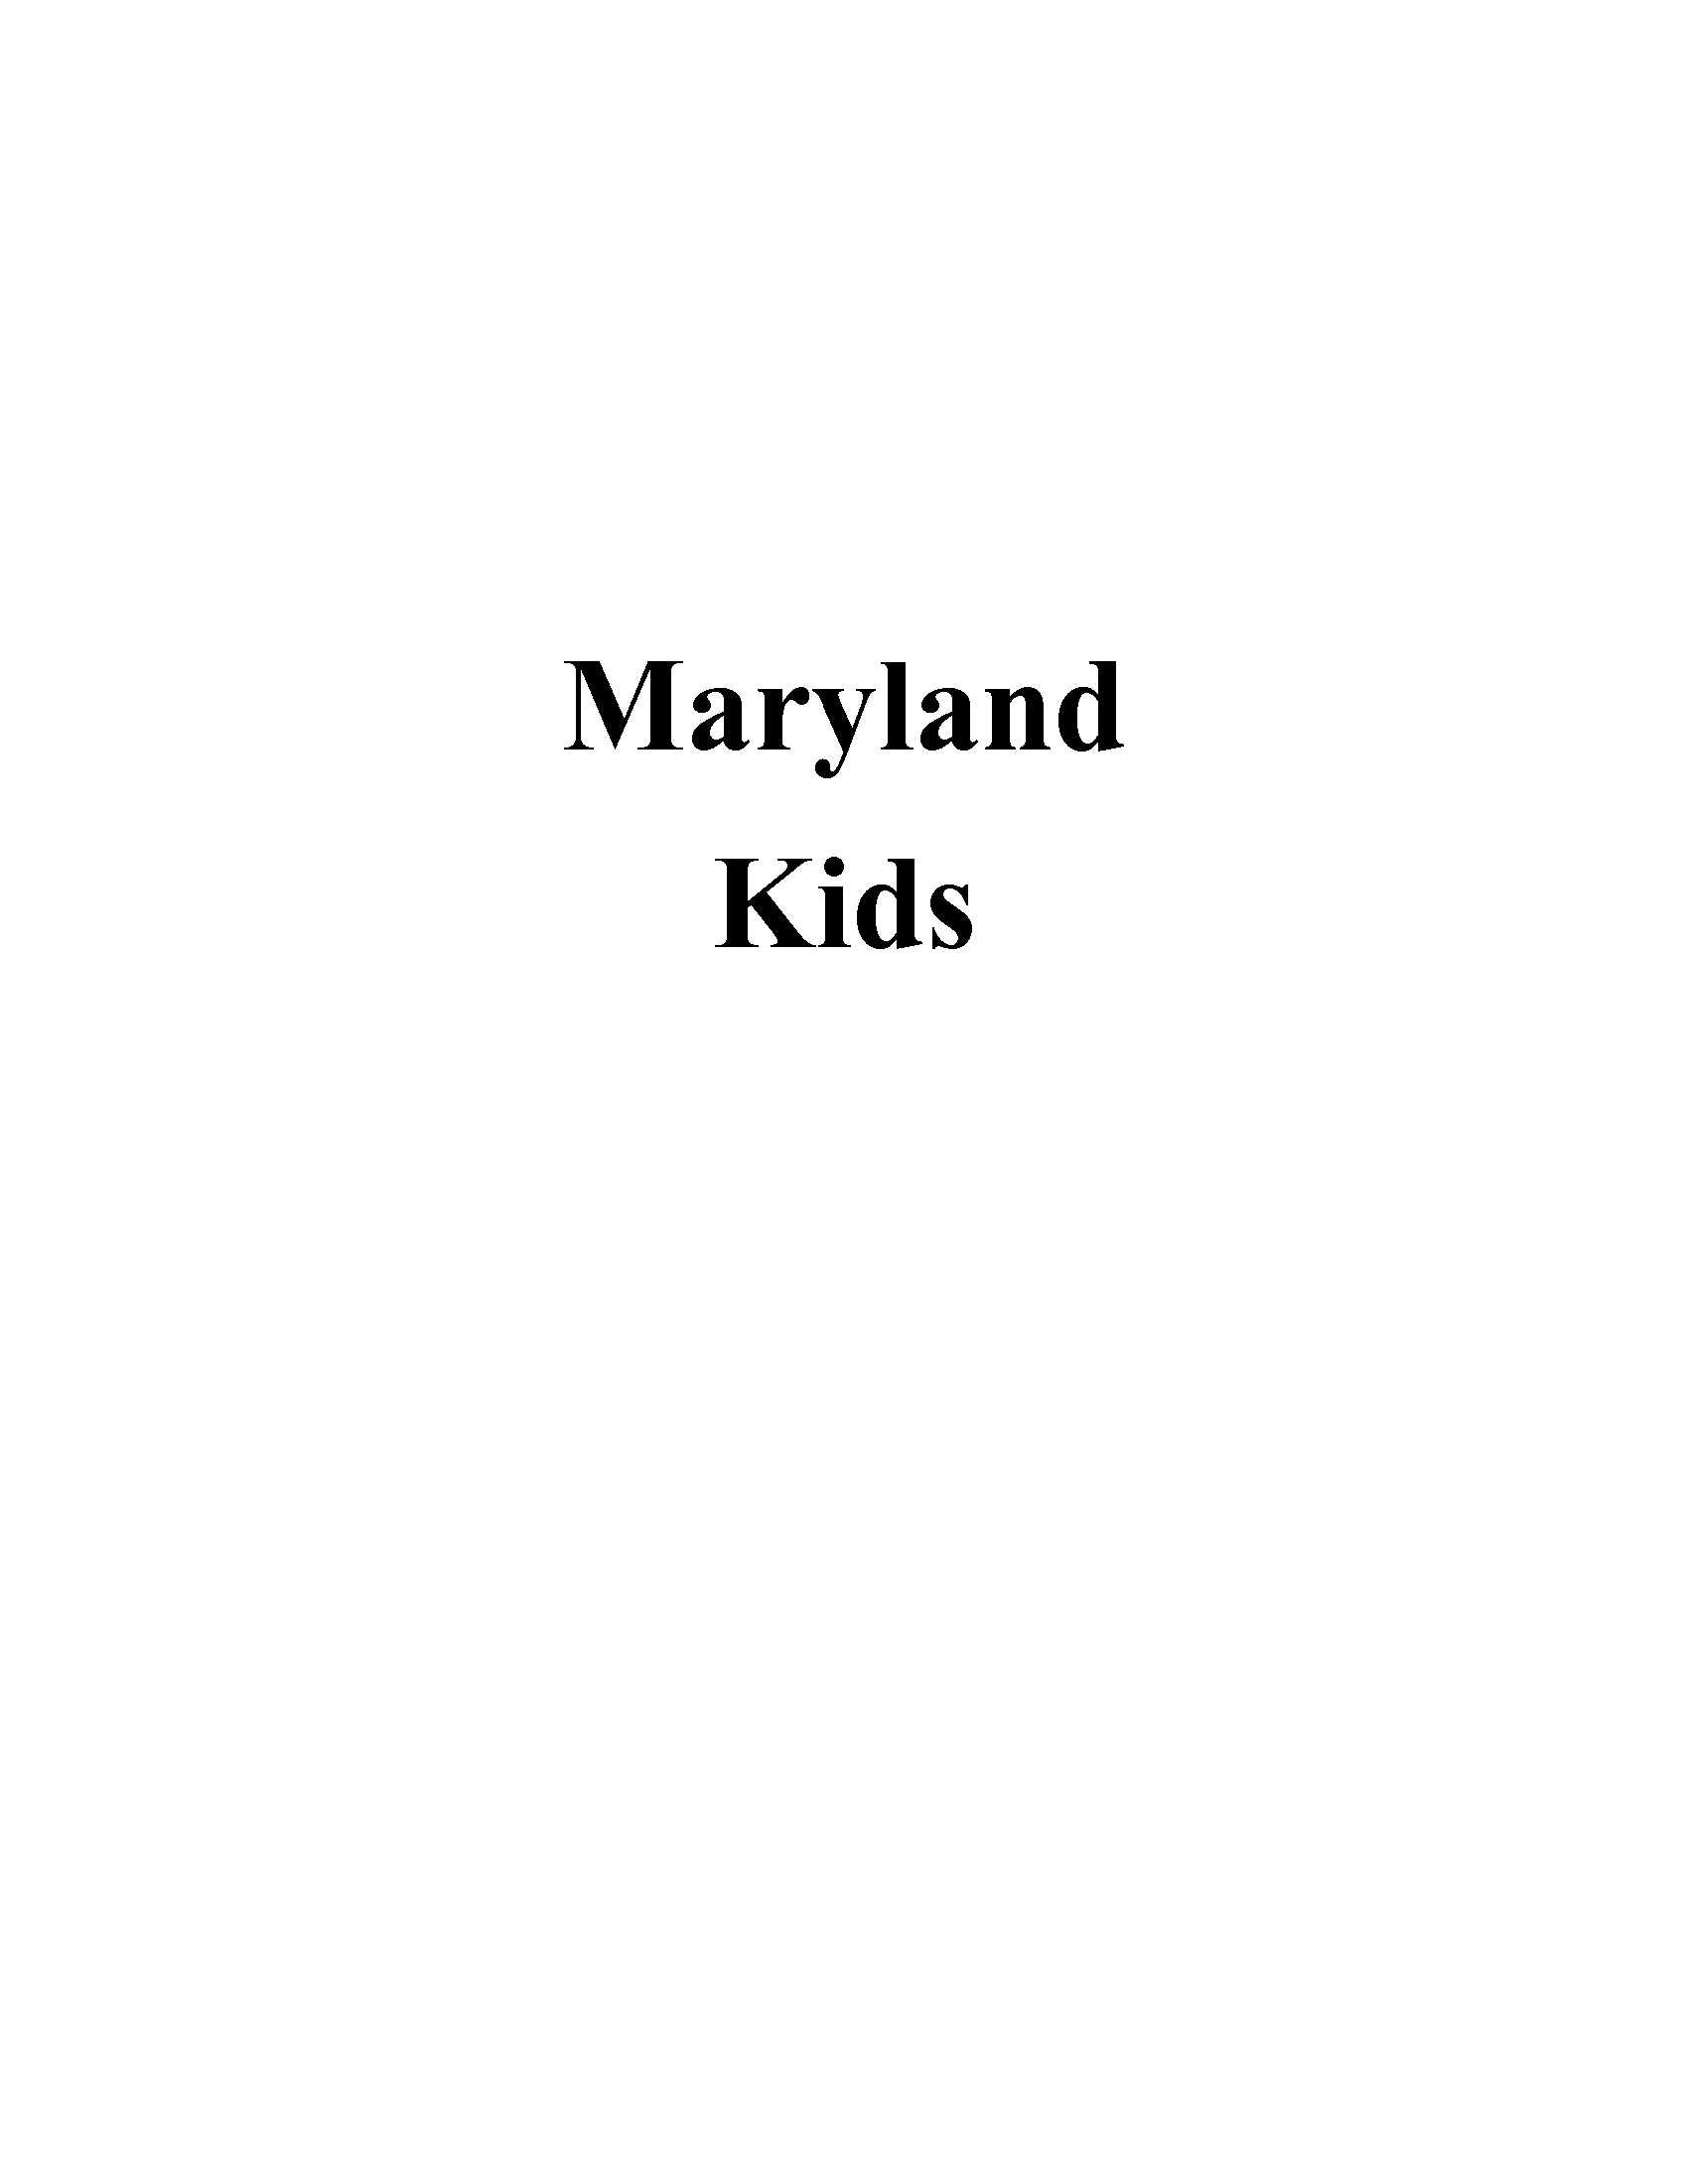 Maryland Kids.jpg